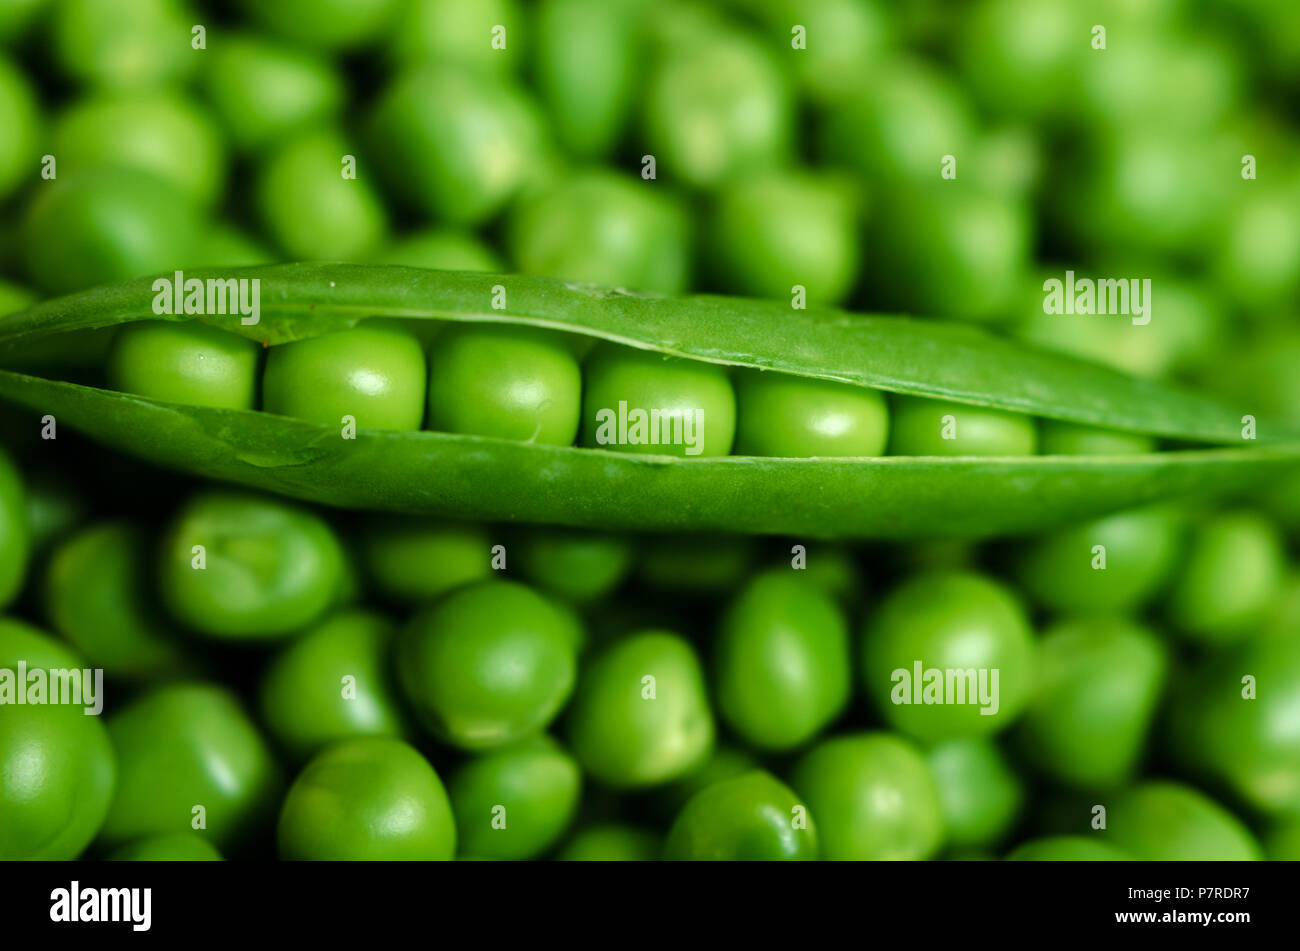 Green pea pod on top of green peas Stock Photo